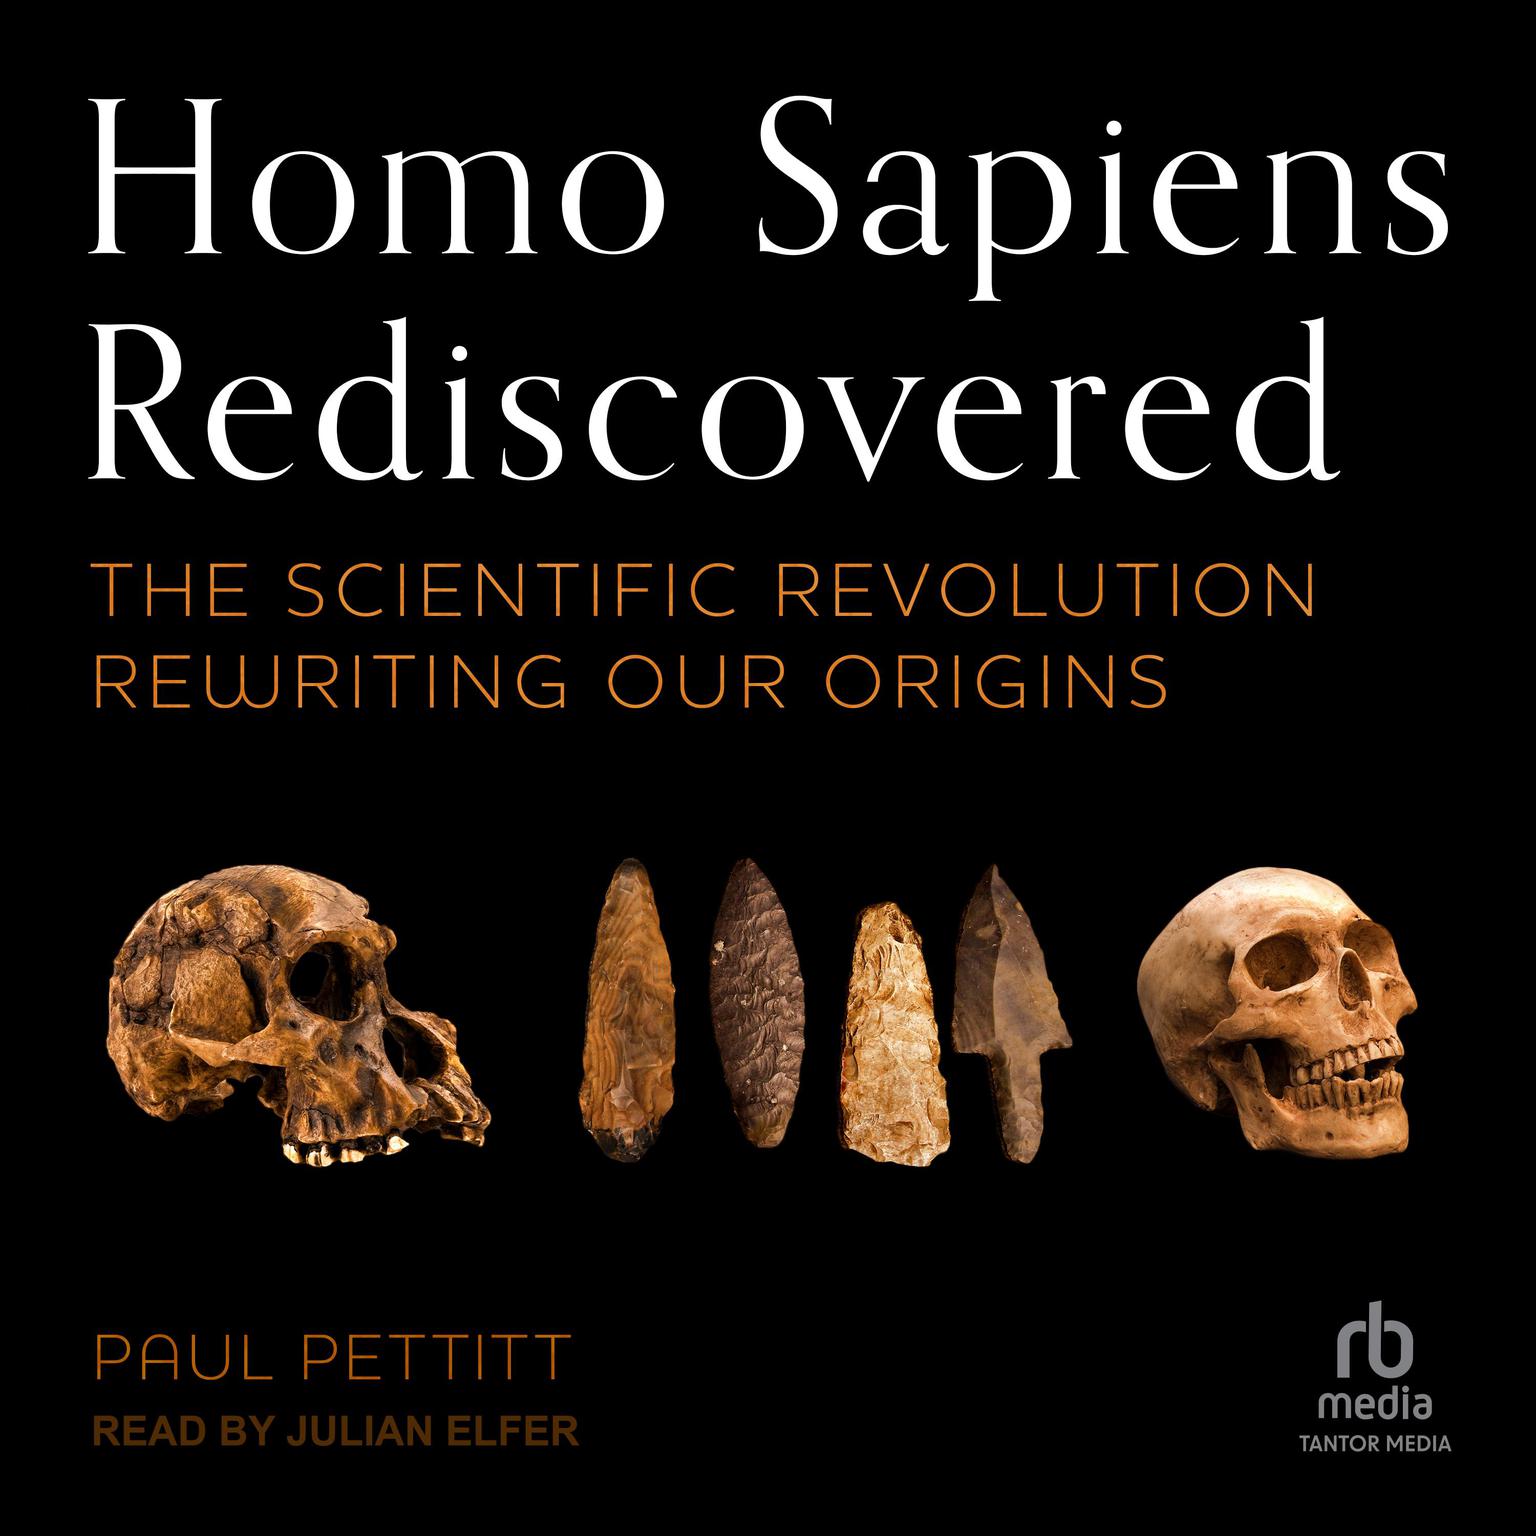 Homo Sapiens Rediscovered: The Scientific Revolution Rewriting Our Origins Audiobook, by Paul Pettitt